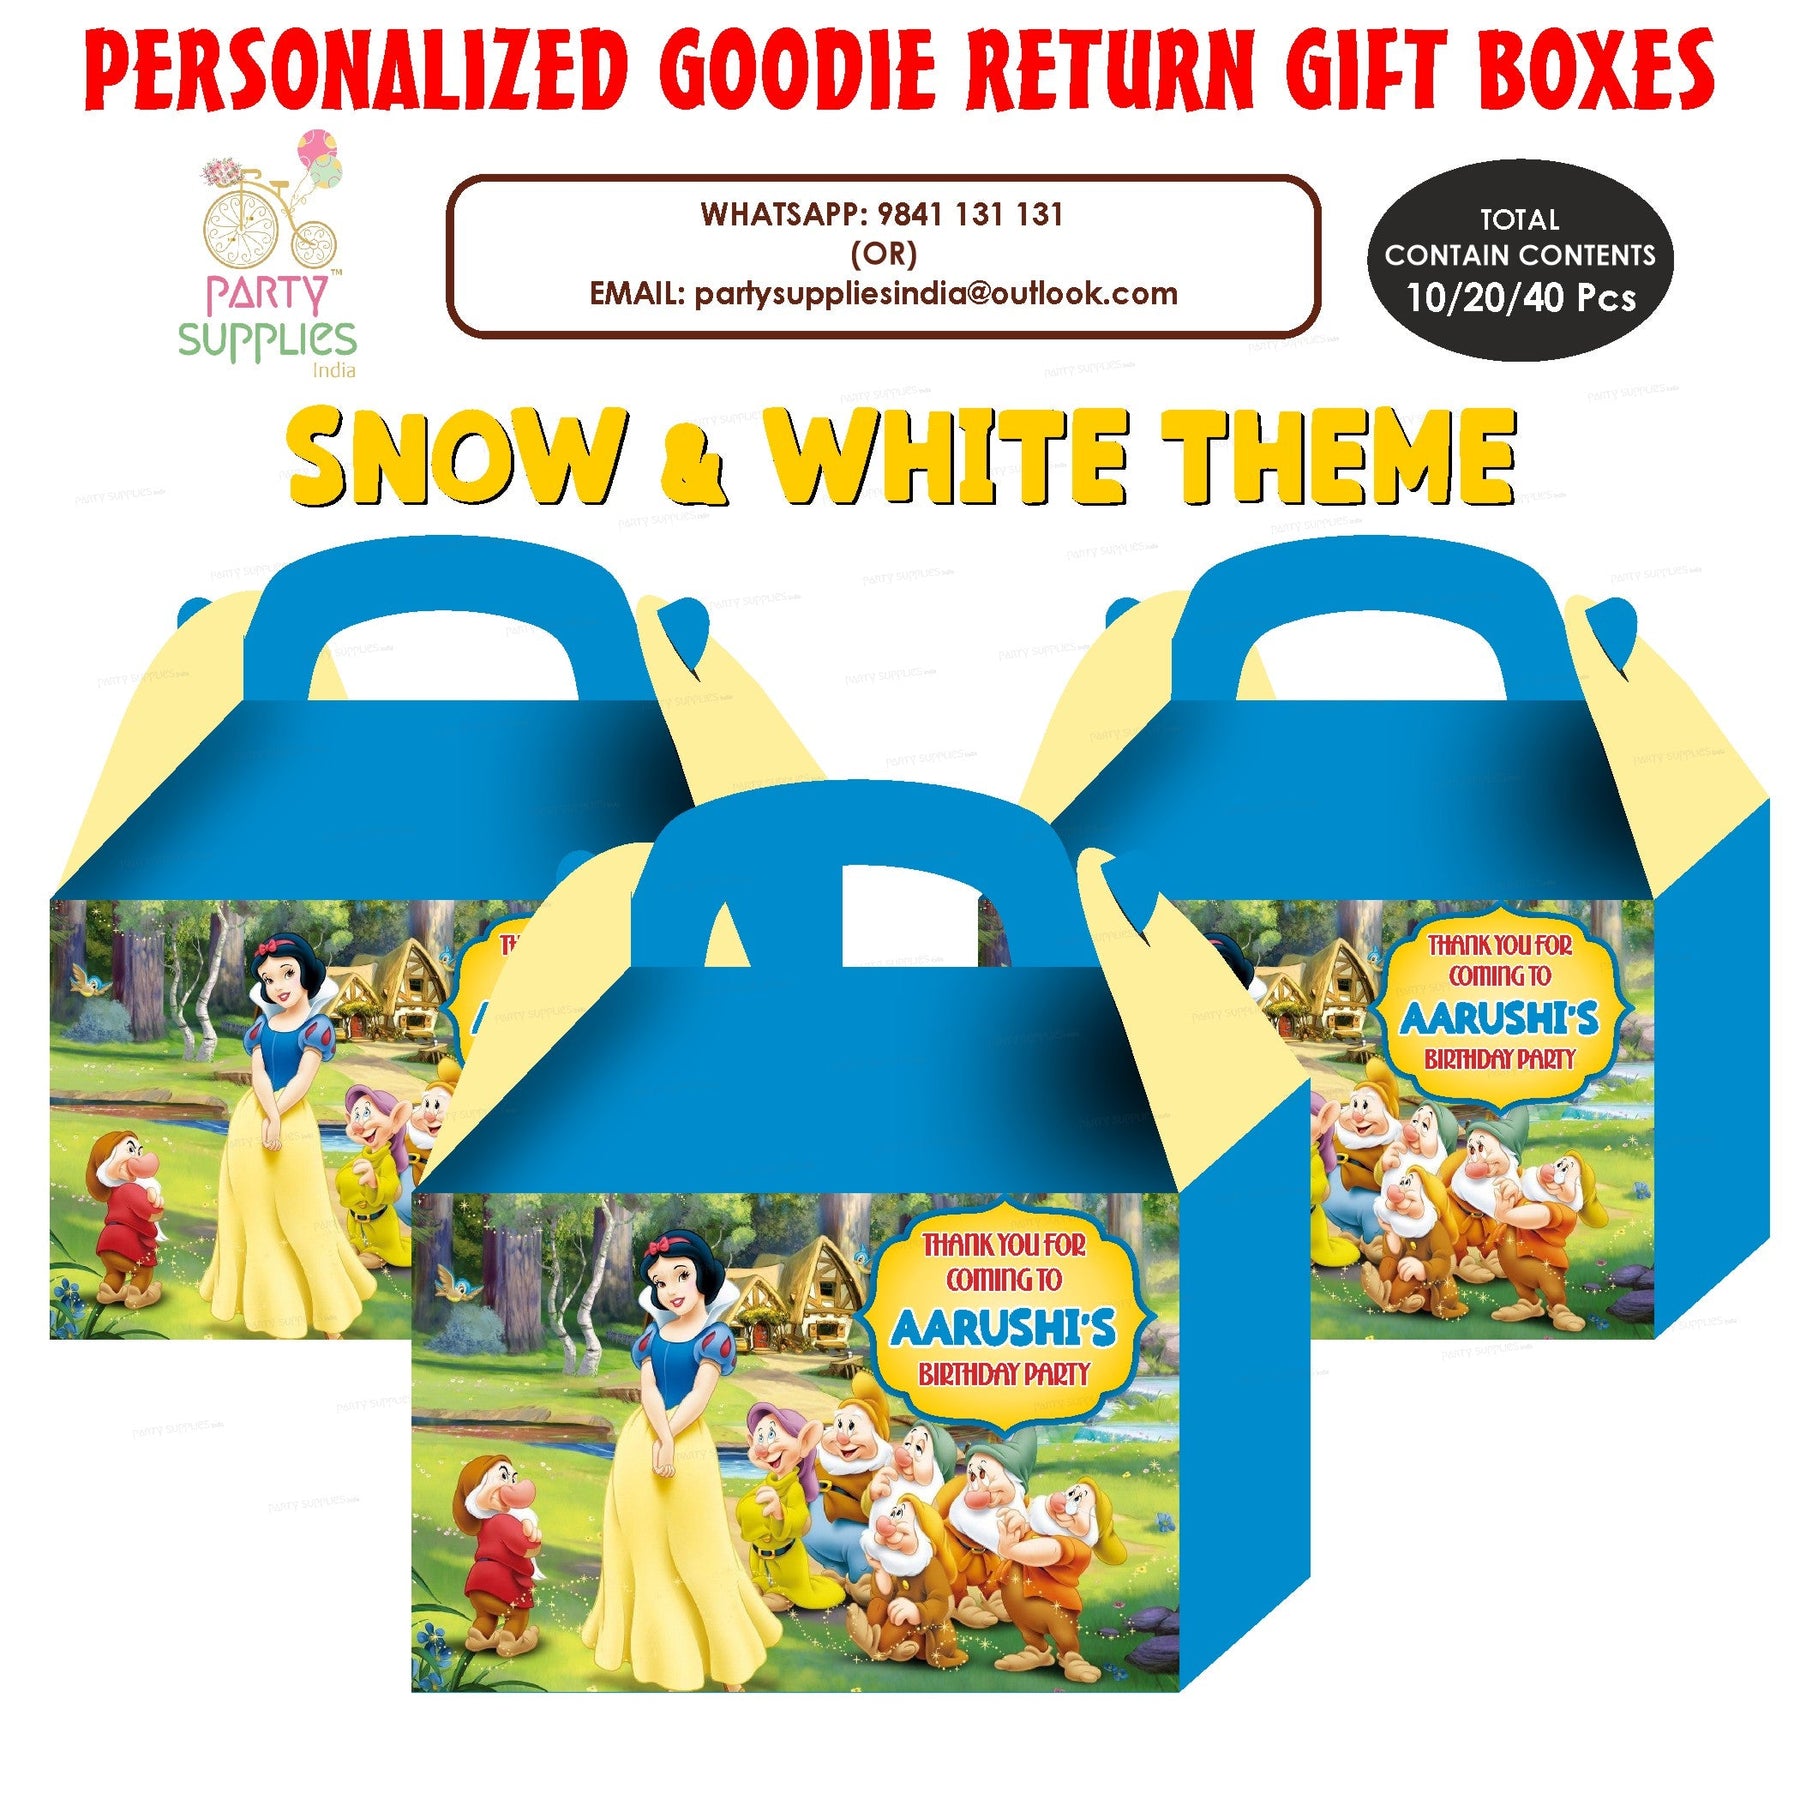 PSI Snow and White Theme Goodie Return Gift Boxes